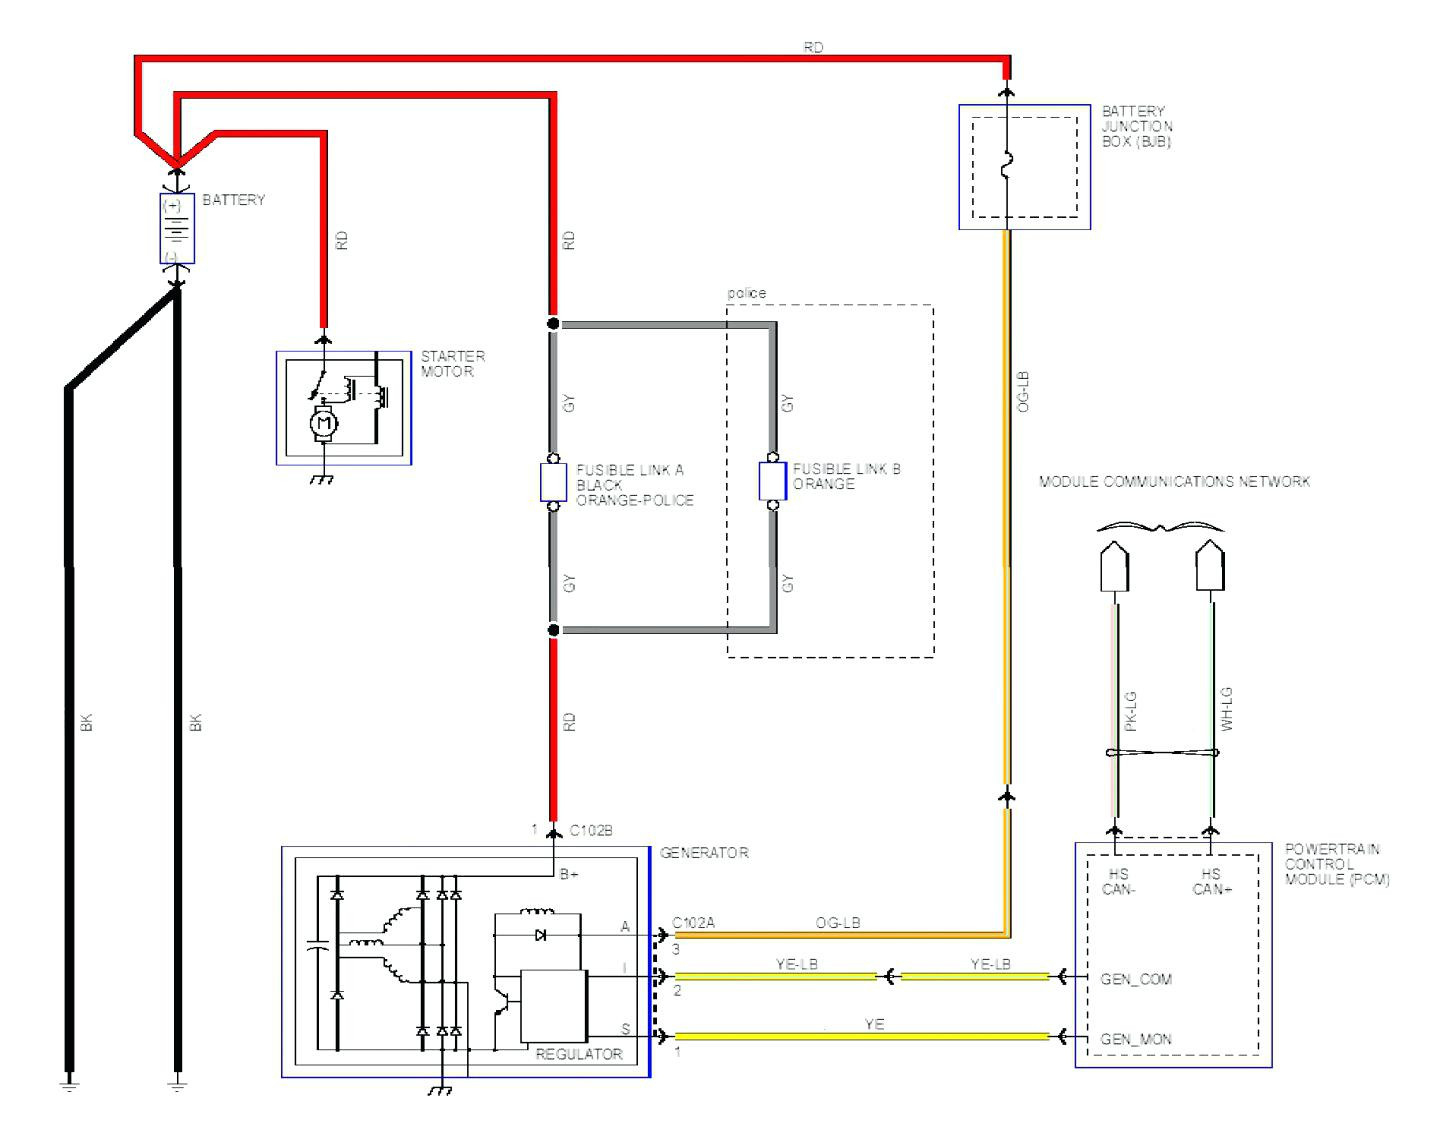 22Si Wiring Diagram | Wiring Library - Delco Remy Alternator Wiring Diagram